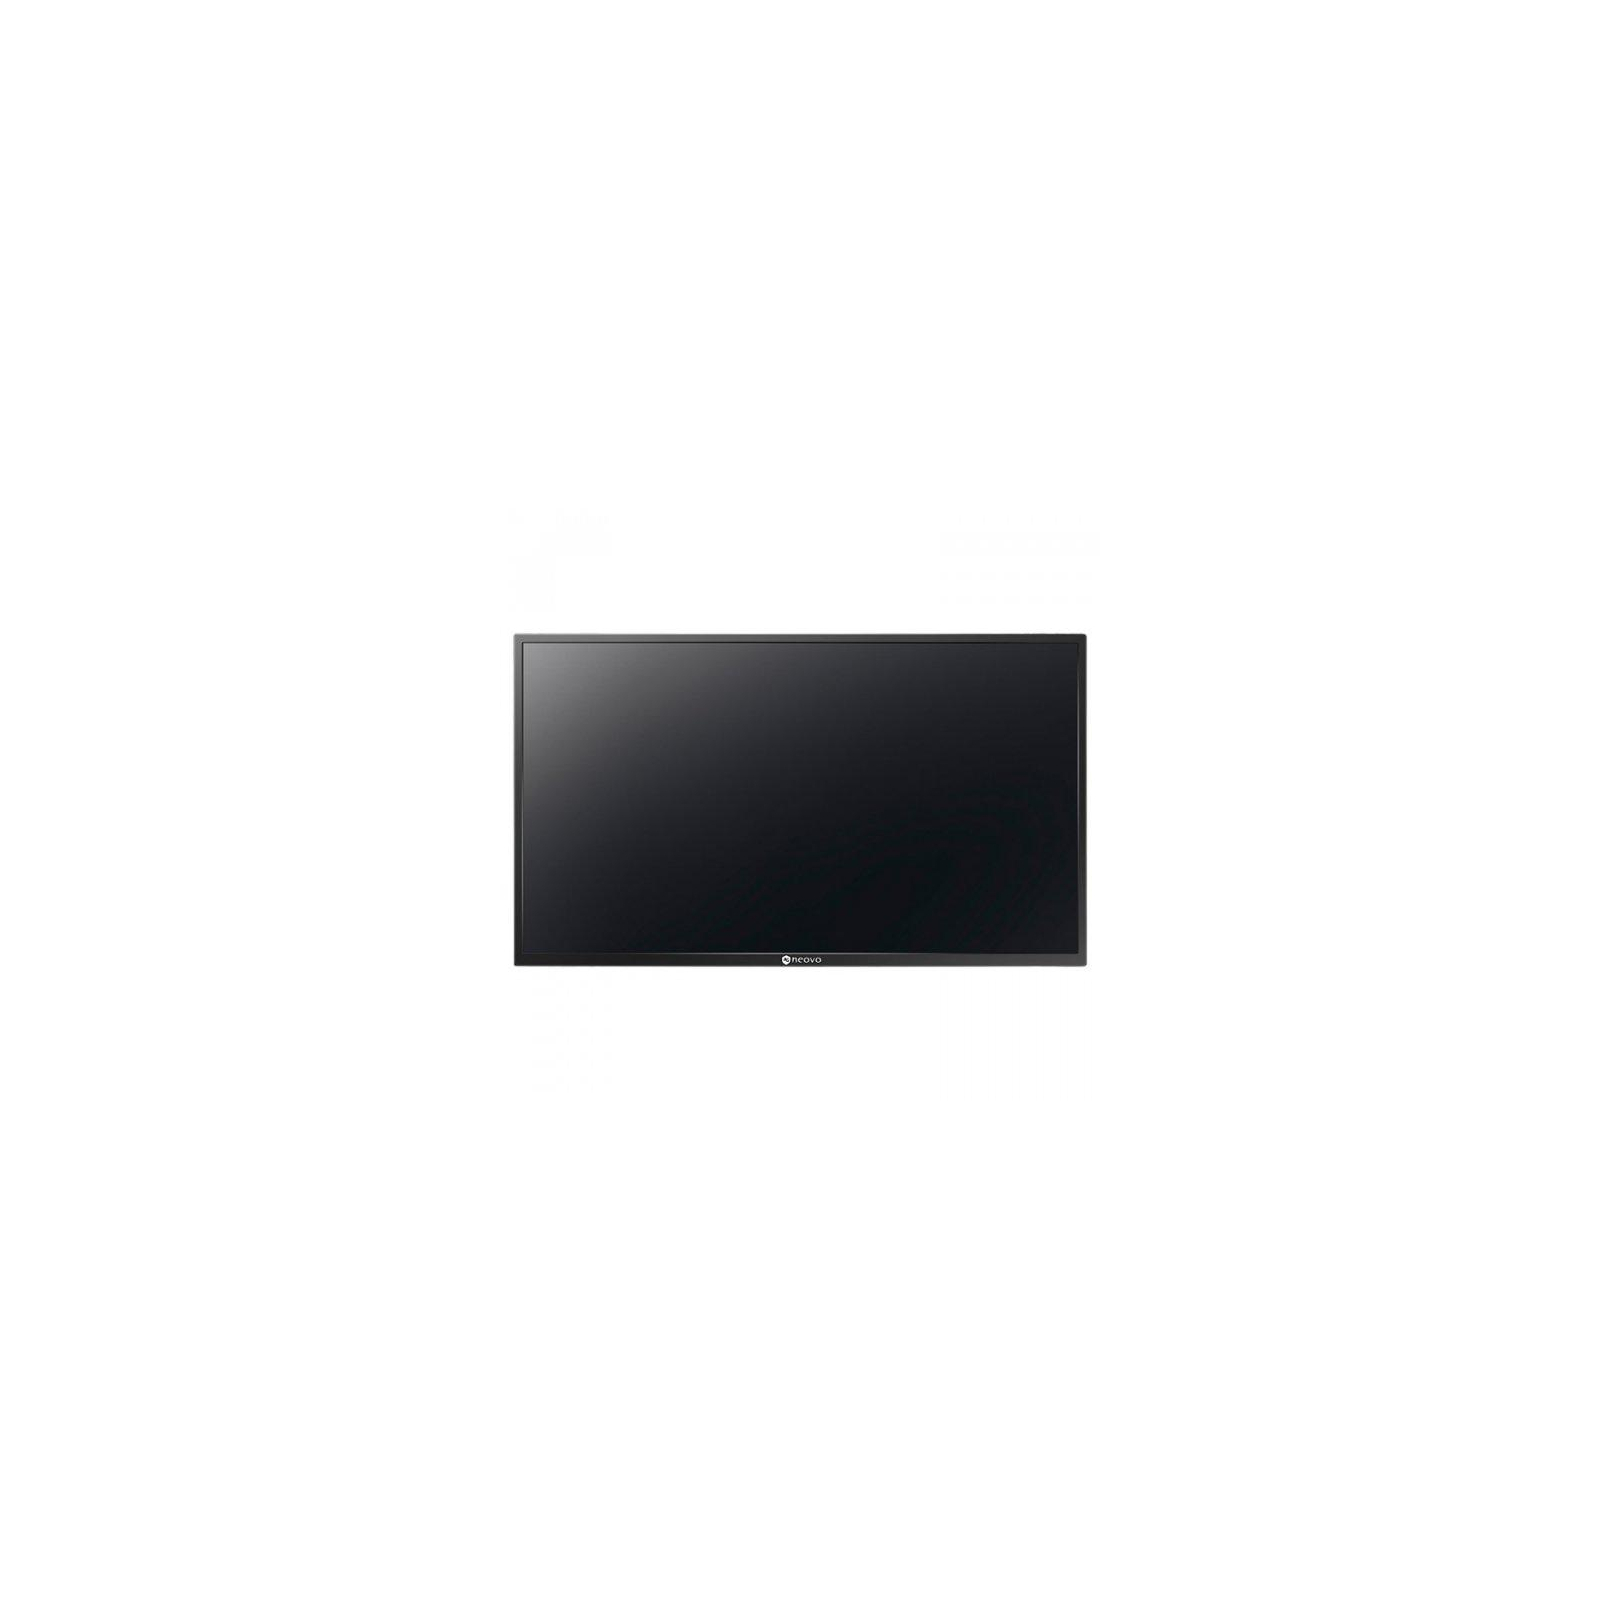 LCD панель Neovo PM-32 BLACK